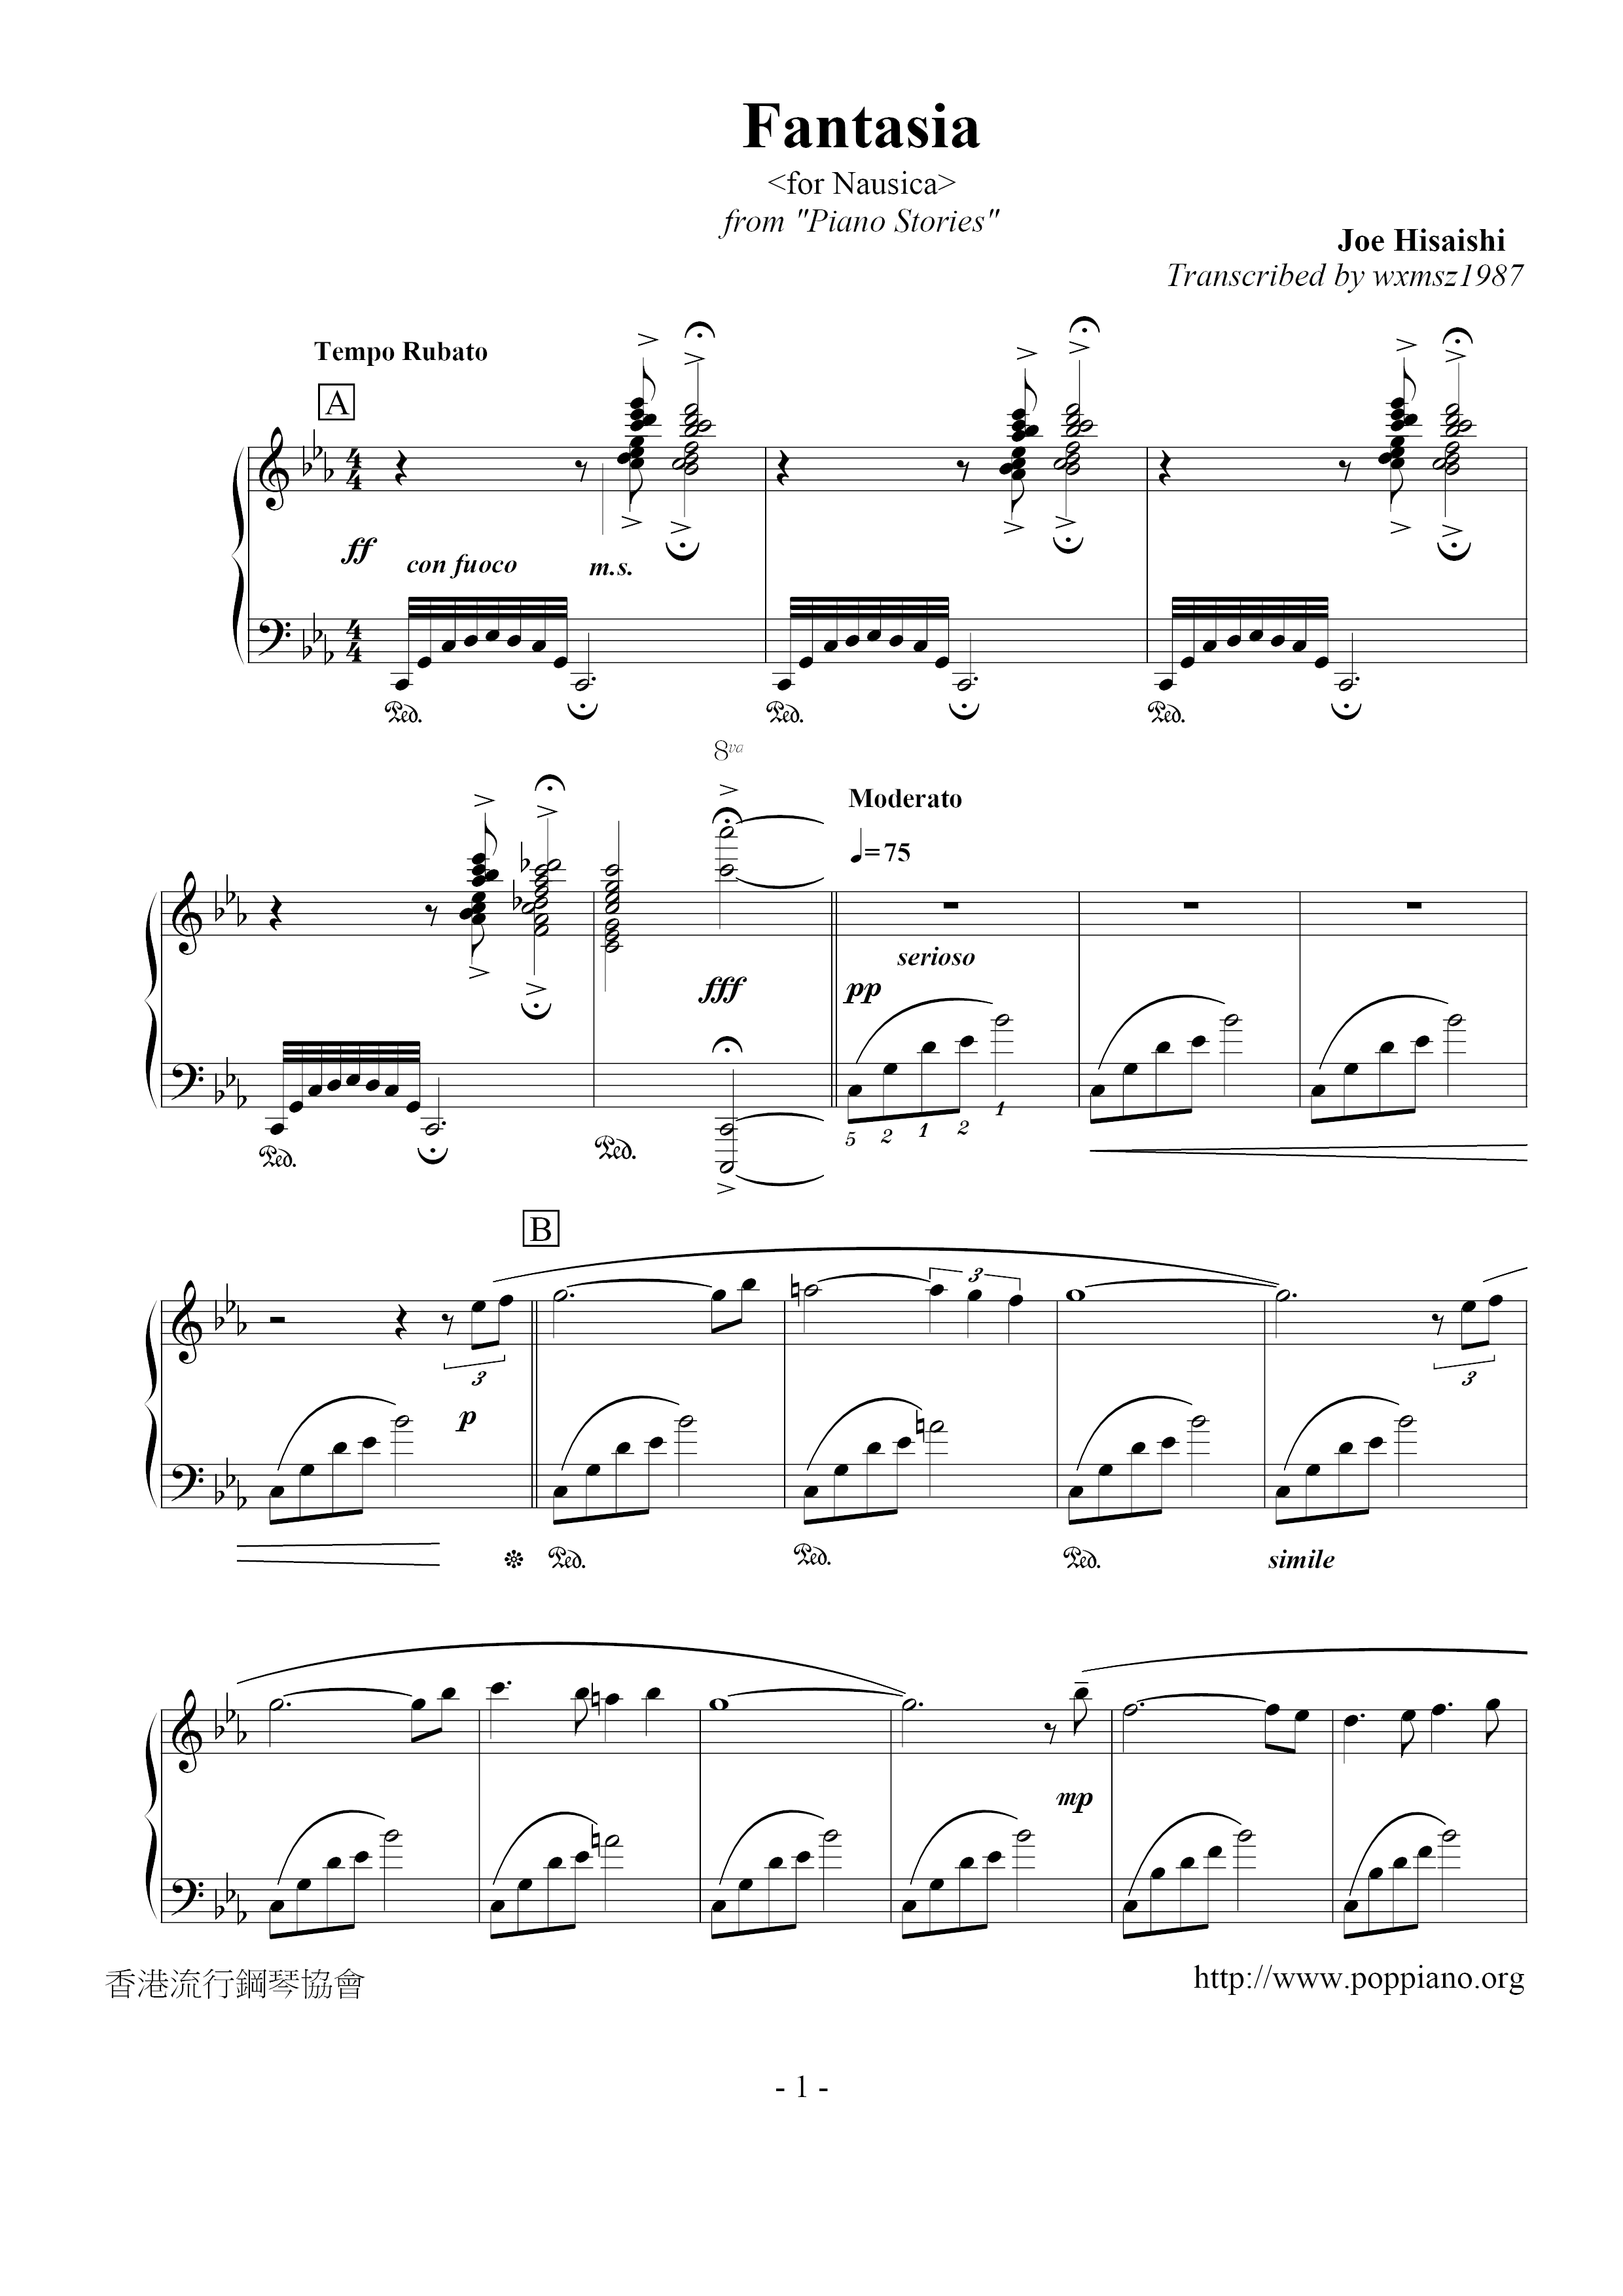 Fantasia Score